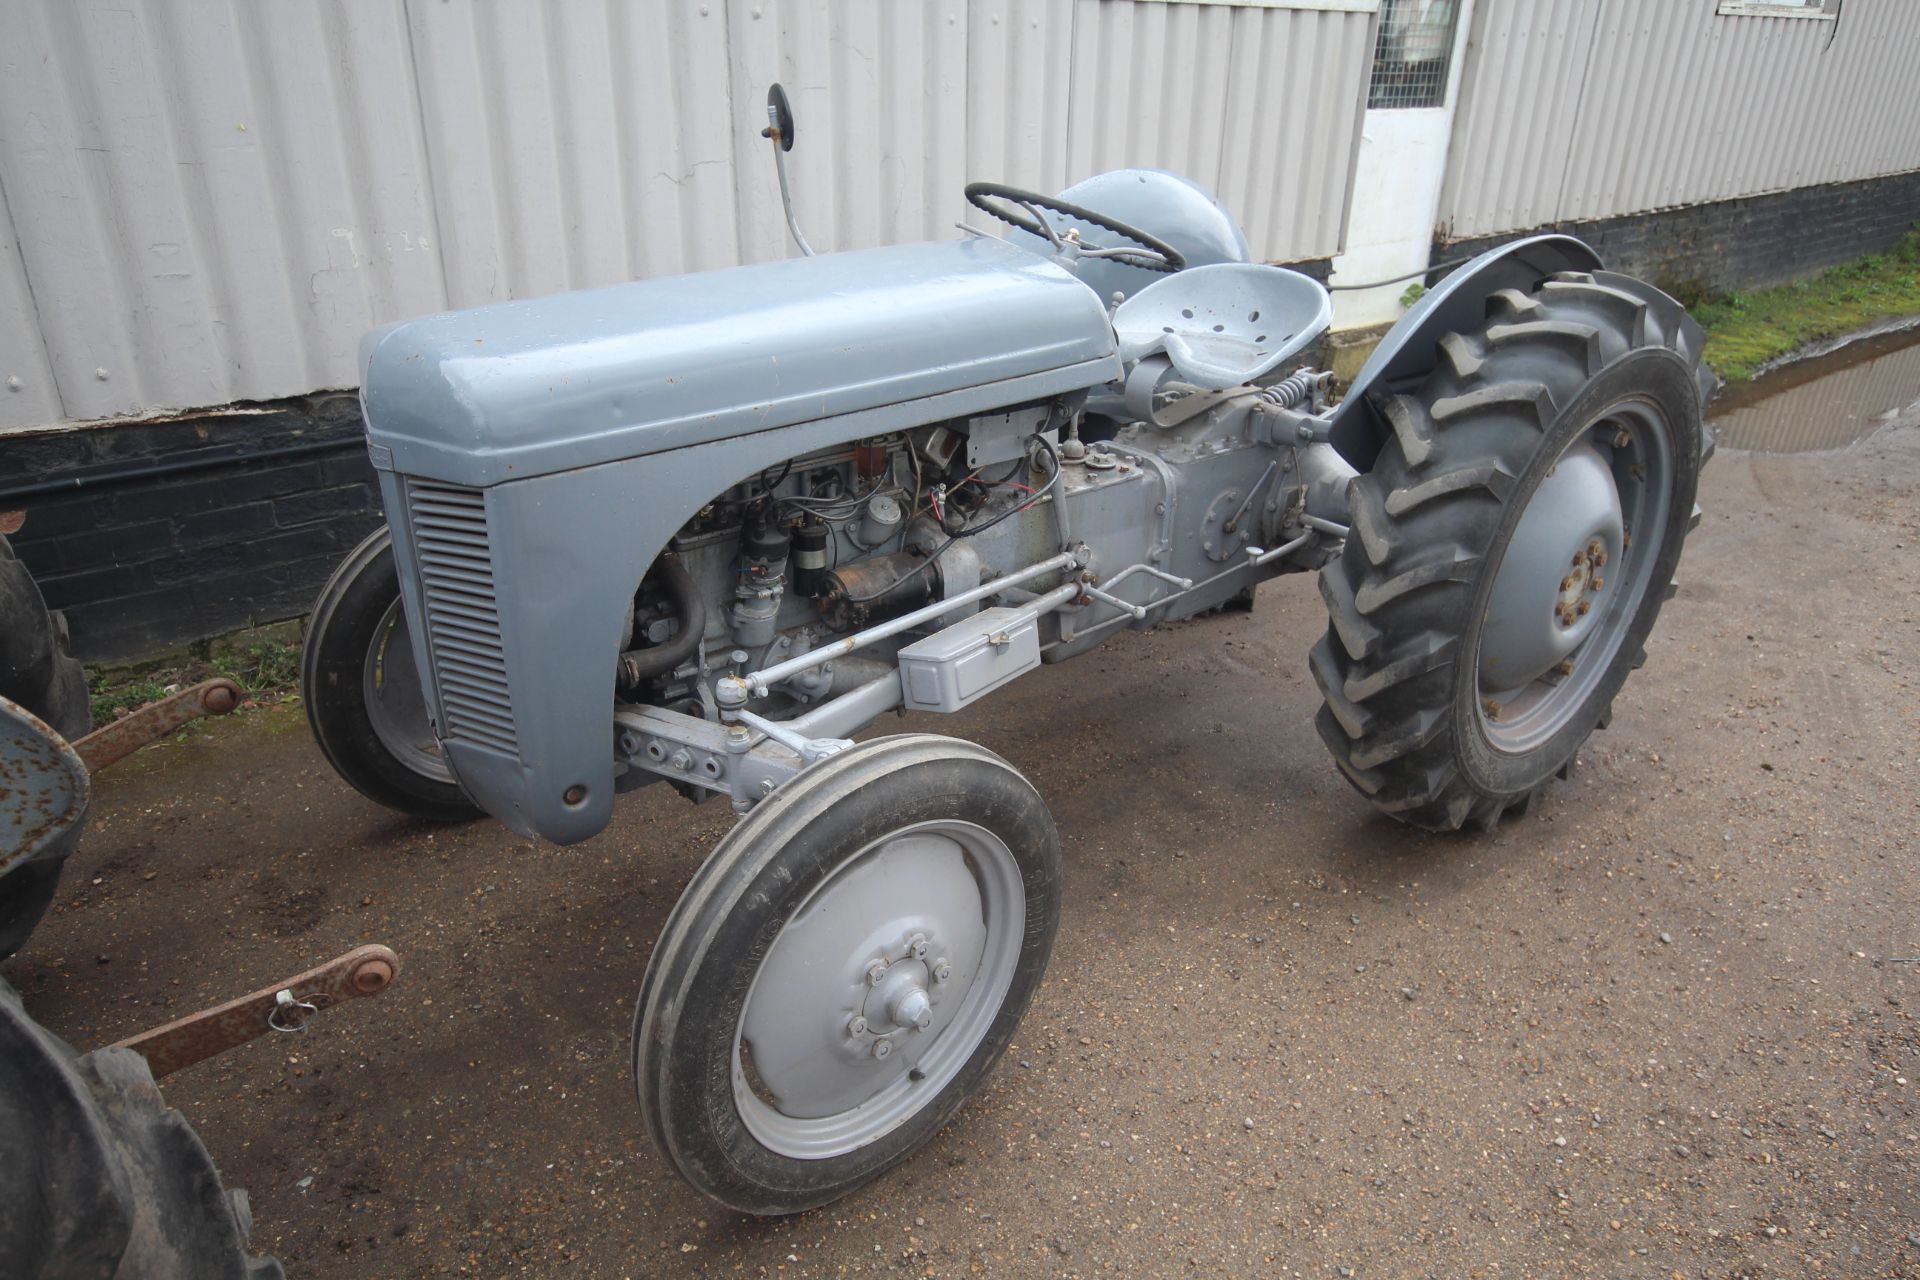 Ferguson TEA 20 Petrol 2WD tractor. Registration 771 XUN. 1948. Serial number 57289. 11.2-28 rear